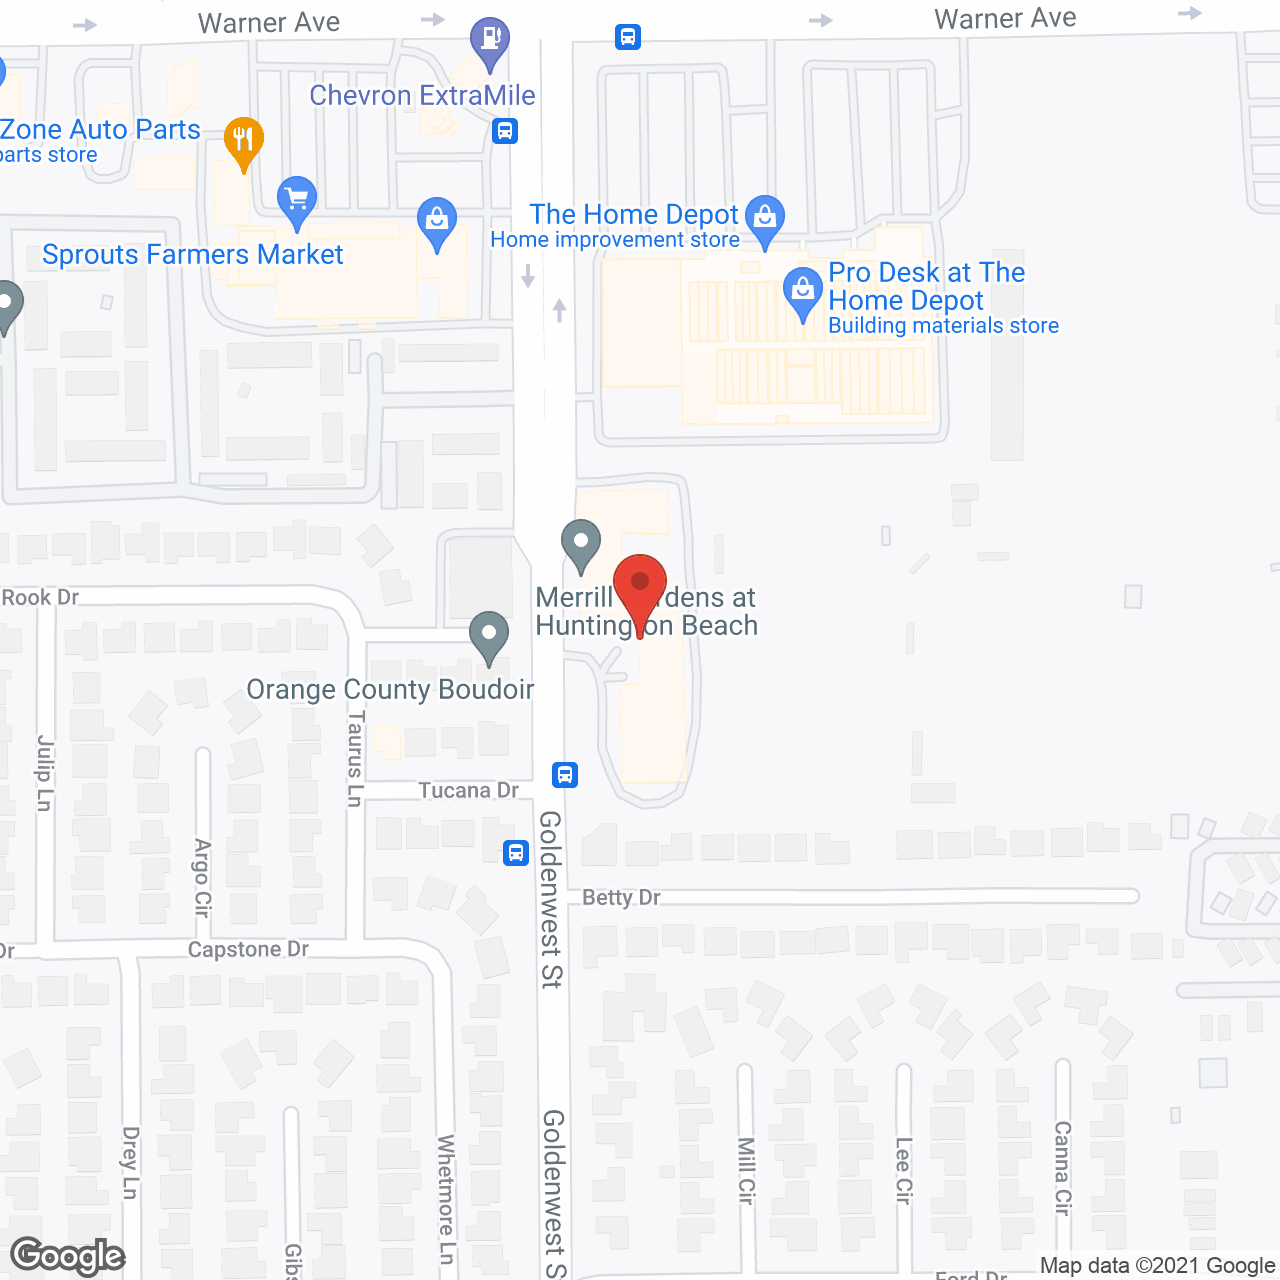 Merrill Gardens at Huntington Beach in google map